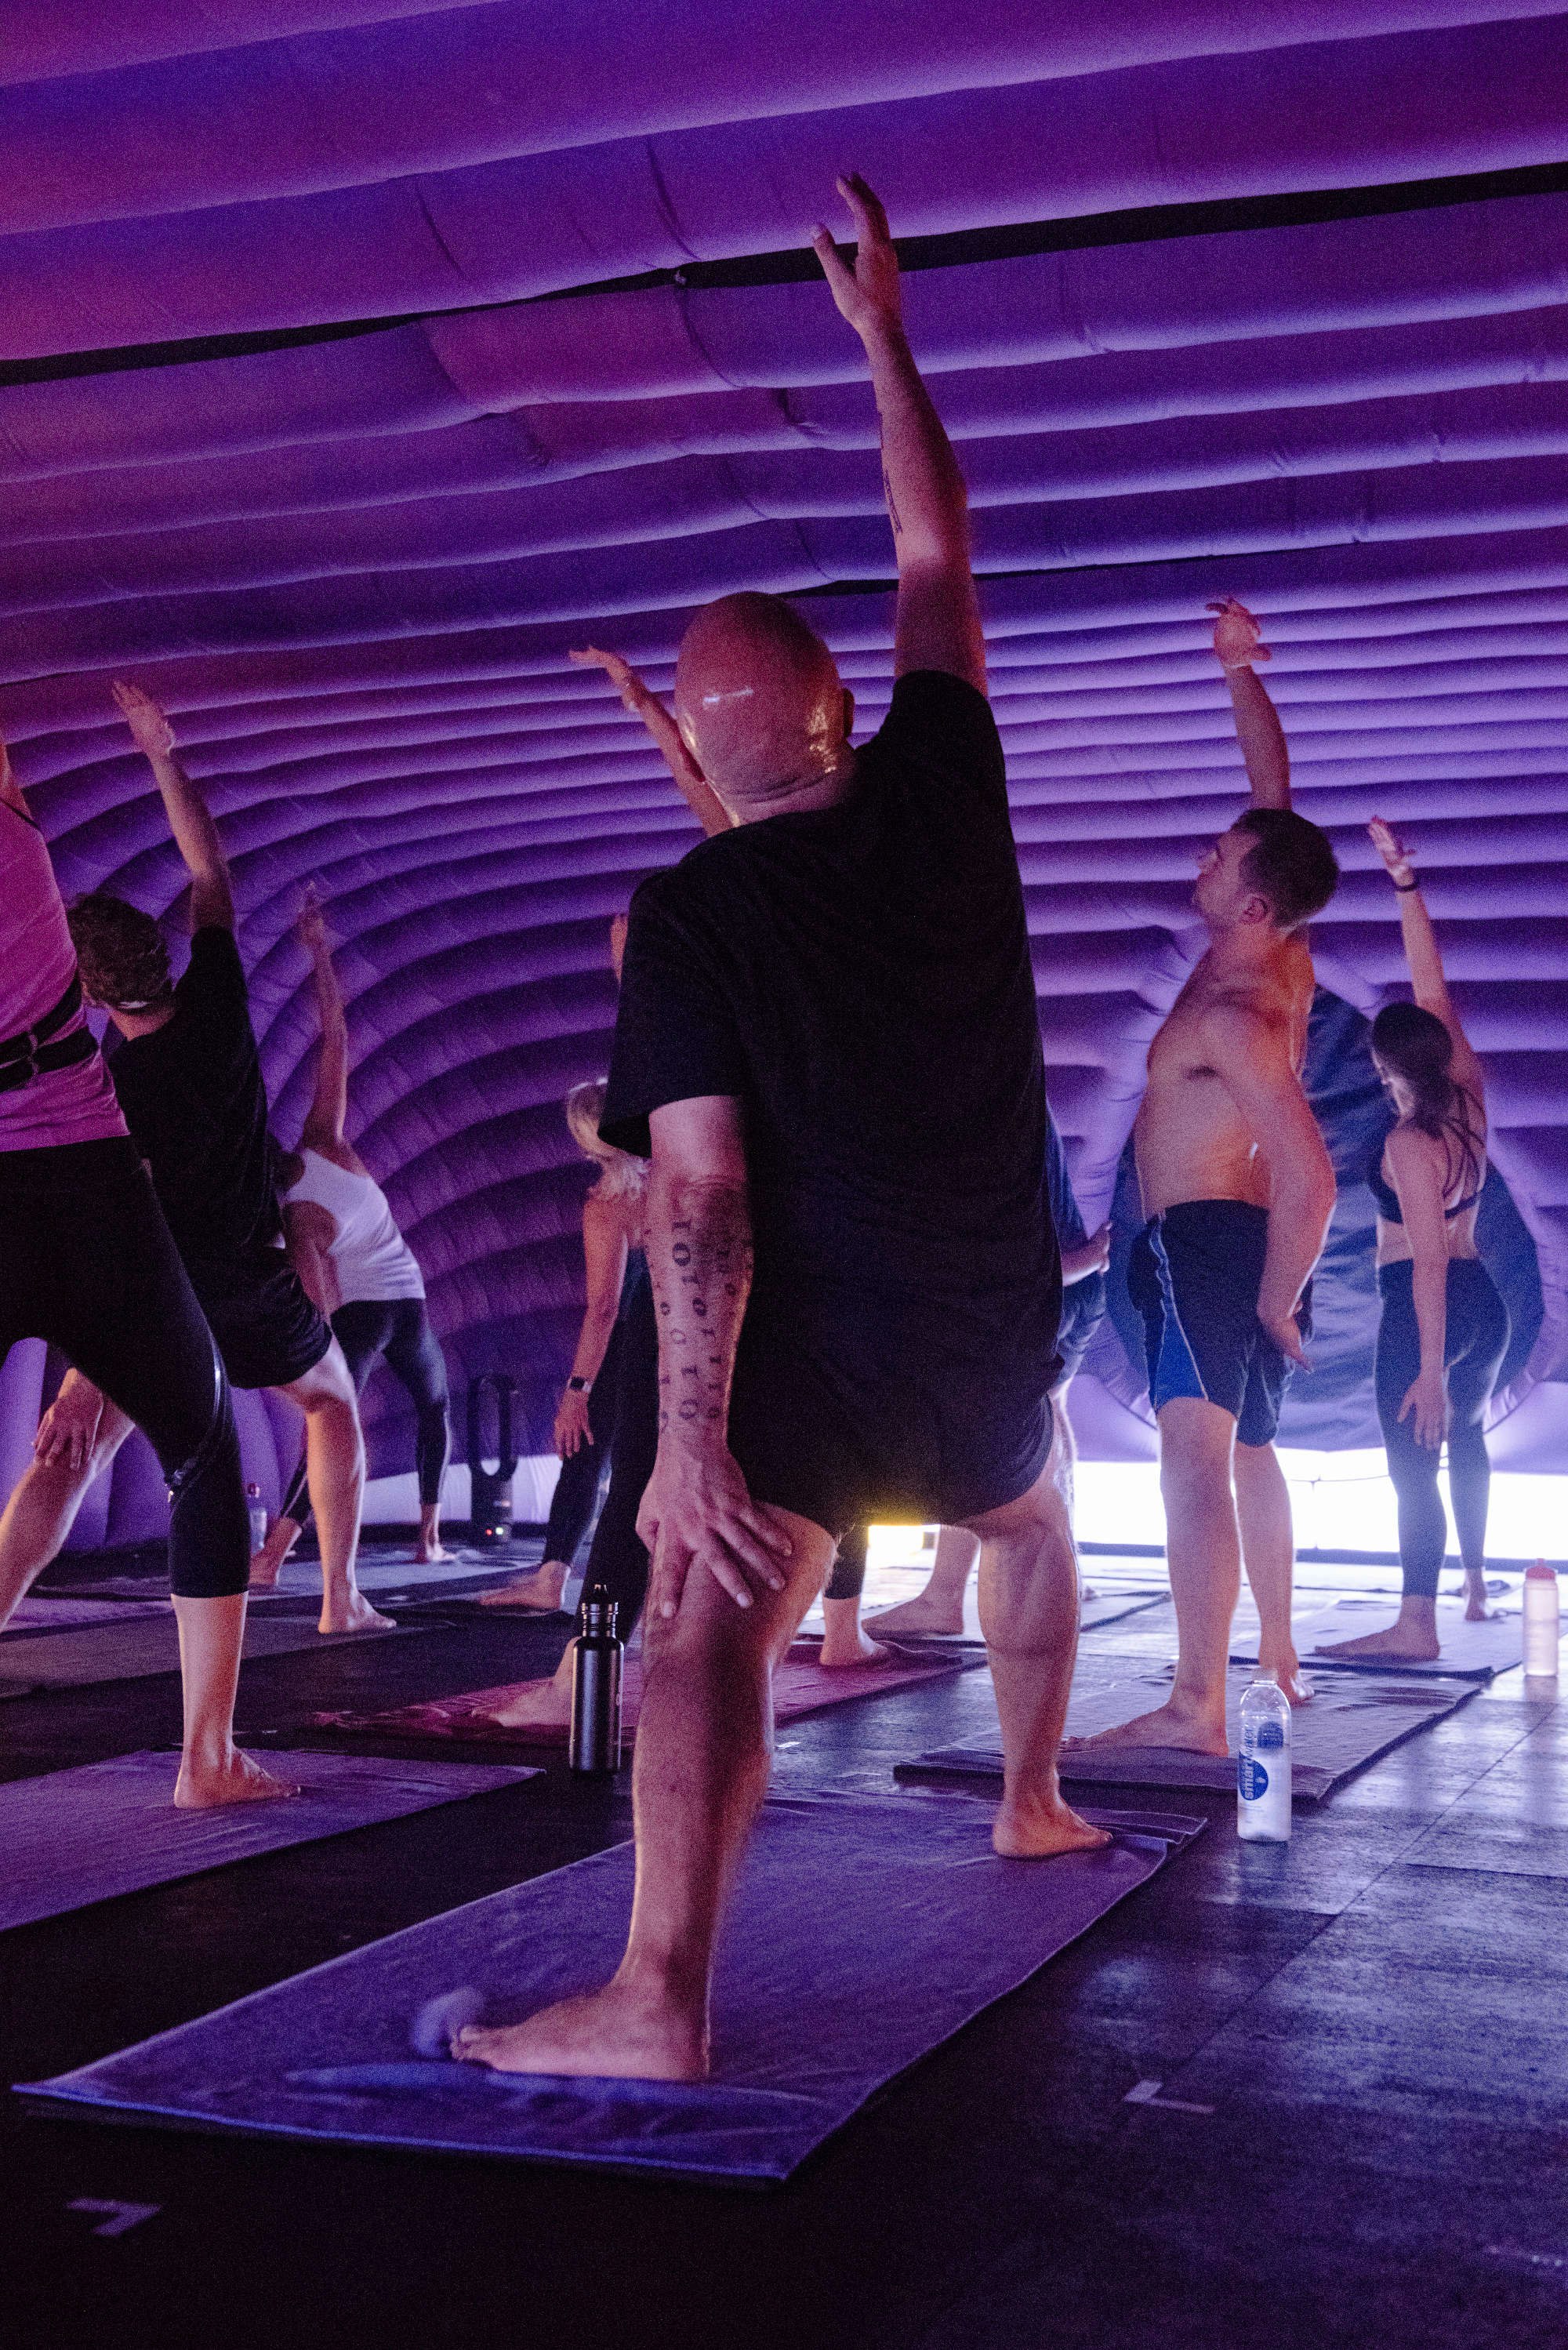 Inflatable Bikram yoga studios on the rise across Europe 